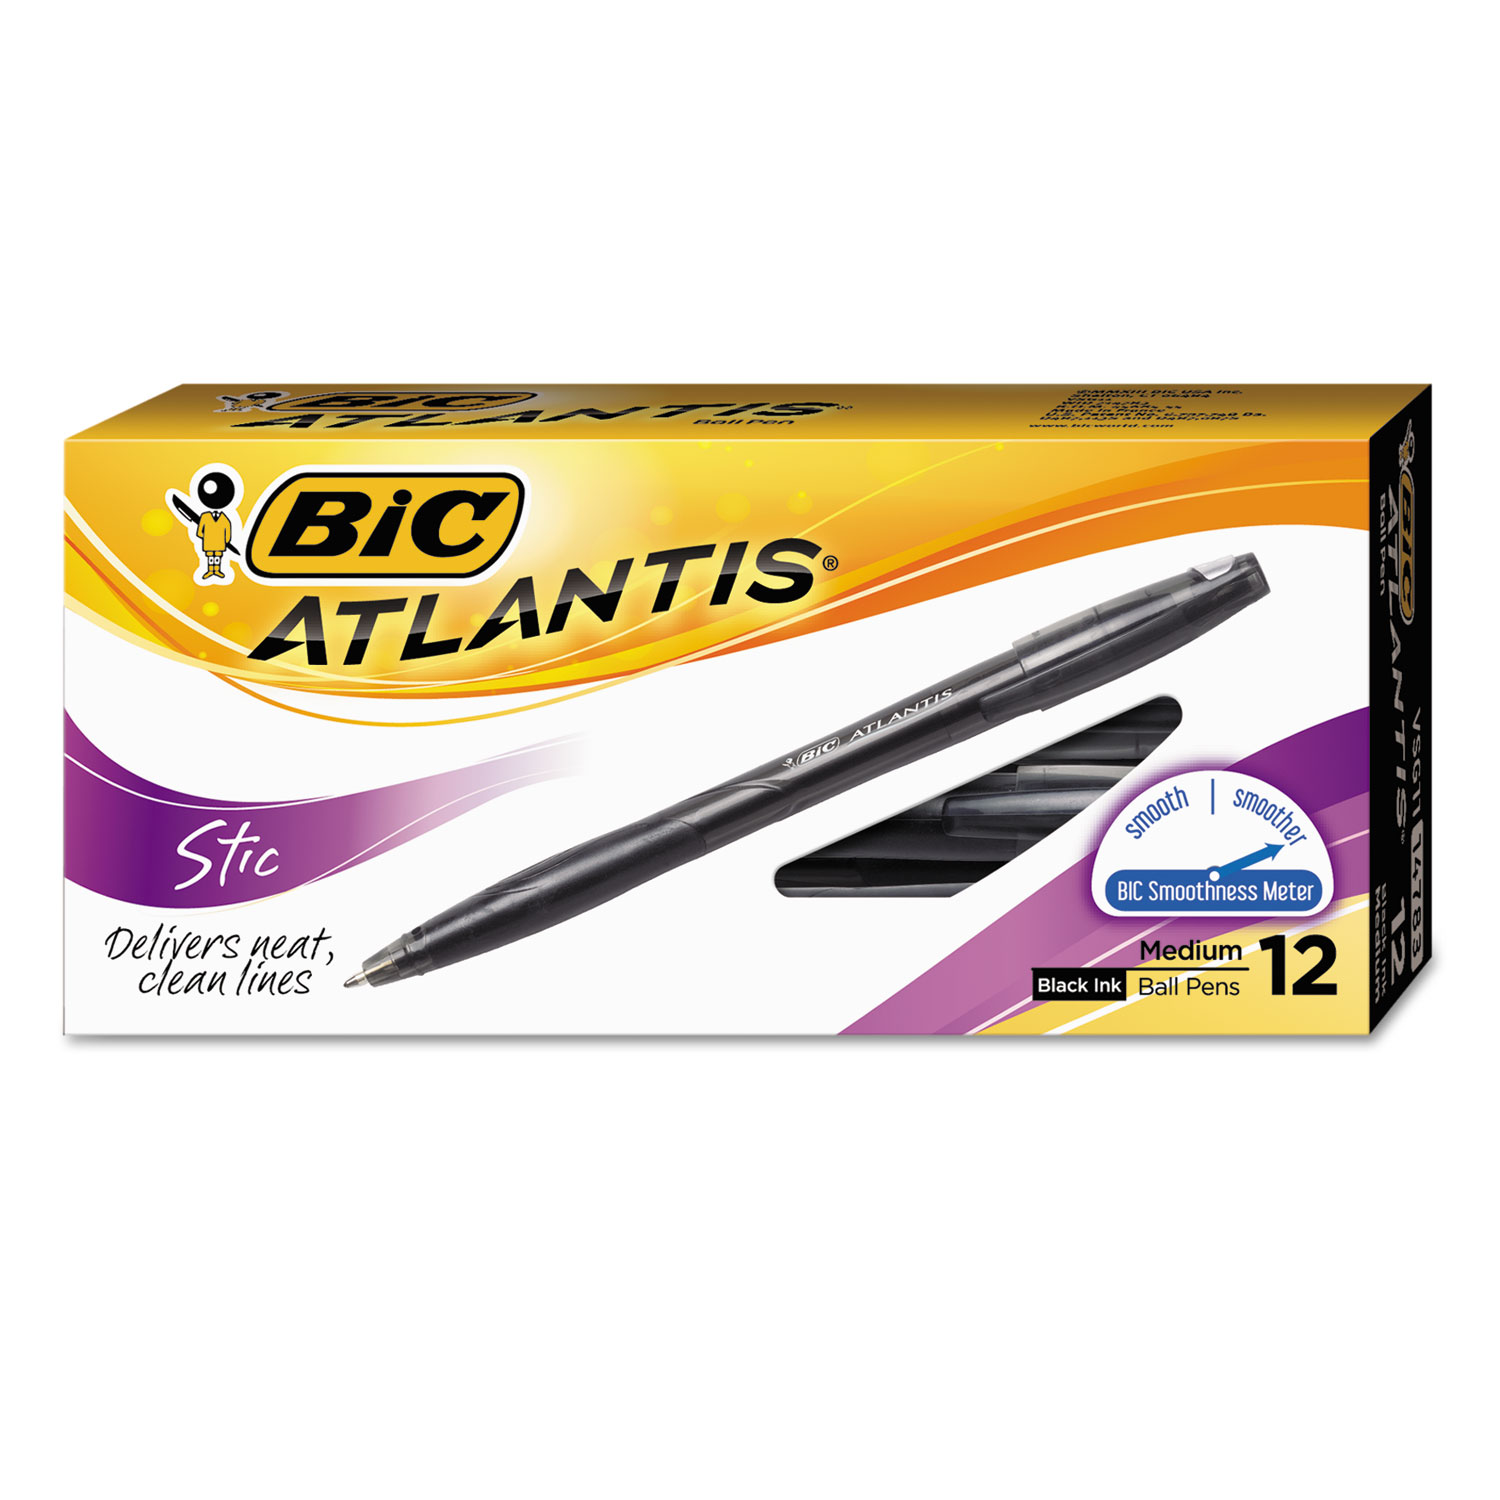 Atlantis Stic Ballpoint Pen, Black Ink, 1mm, Medium, Dozen